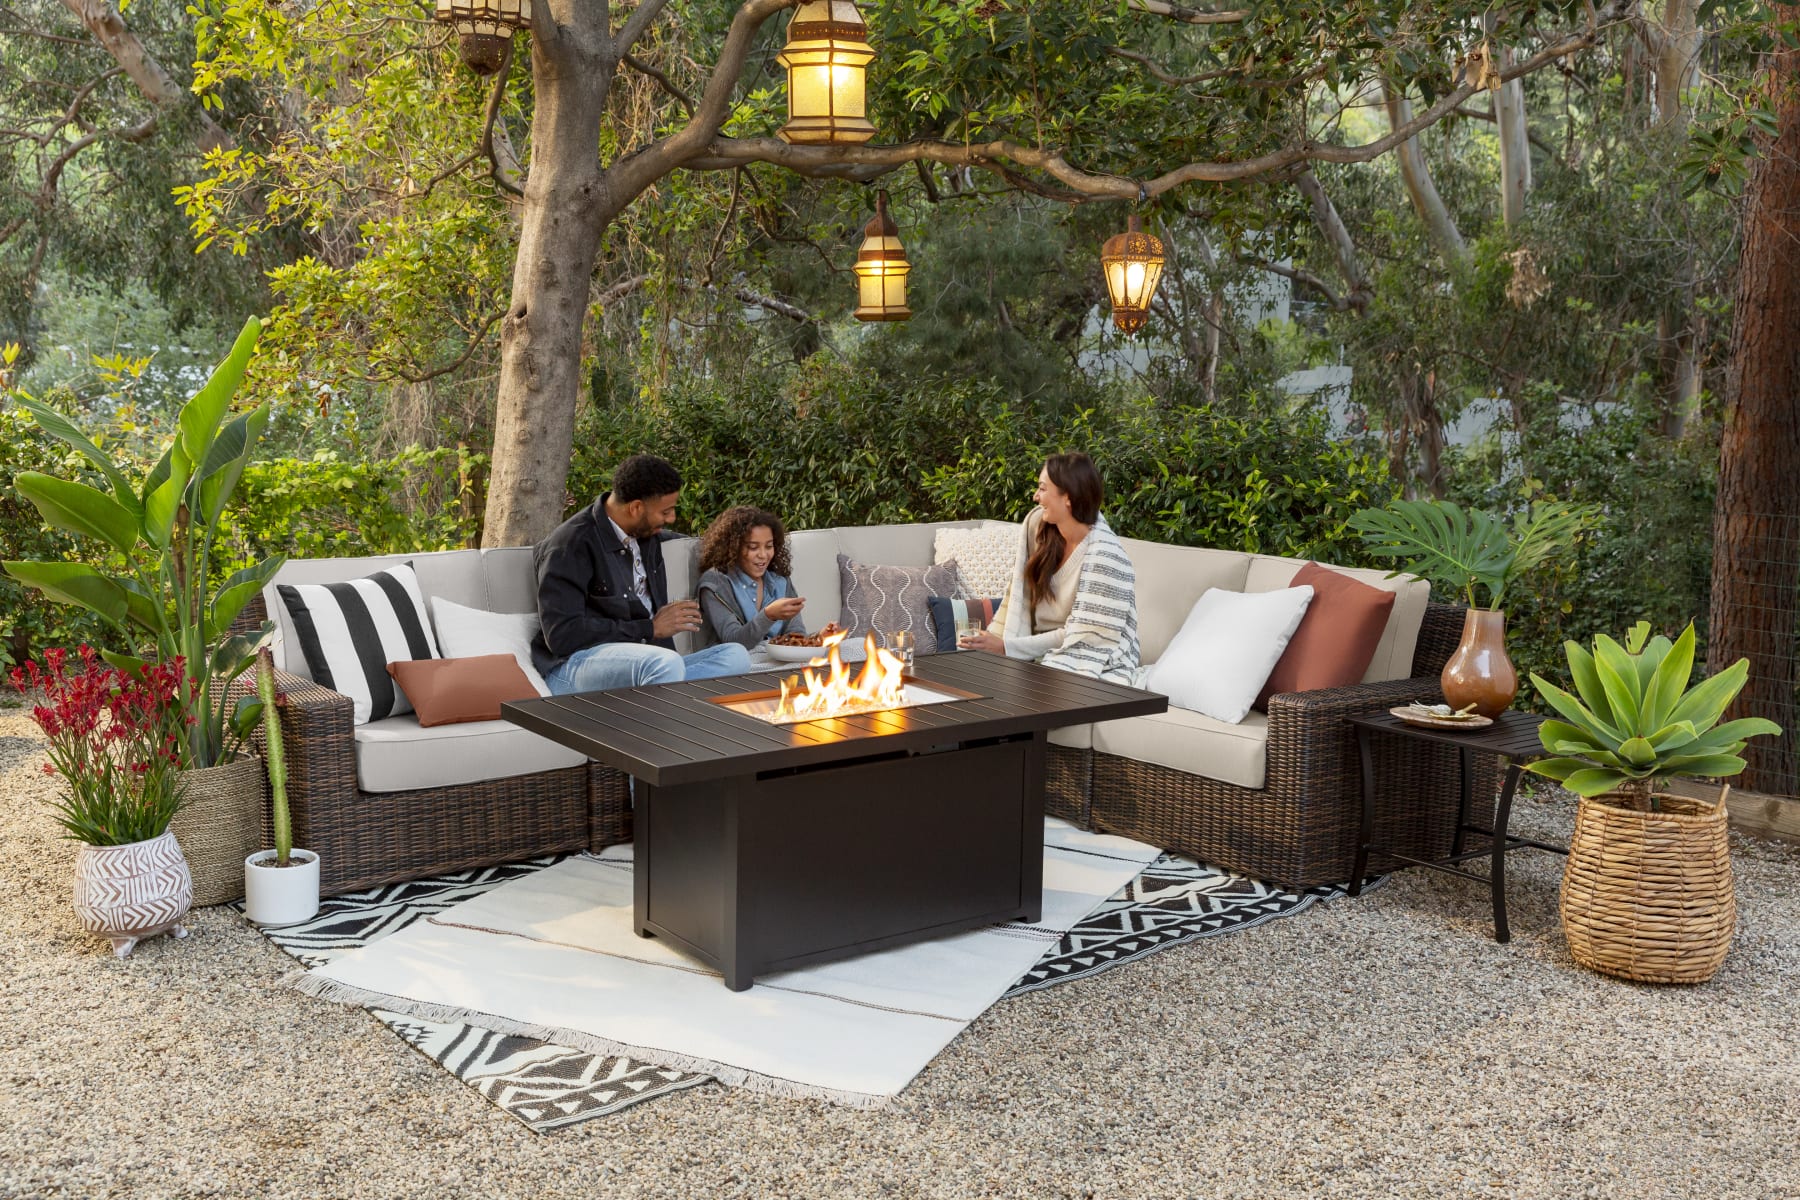 An outdoor patio set in a backyard setting